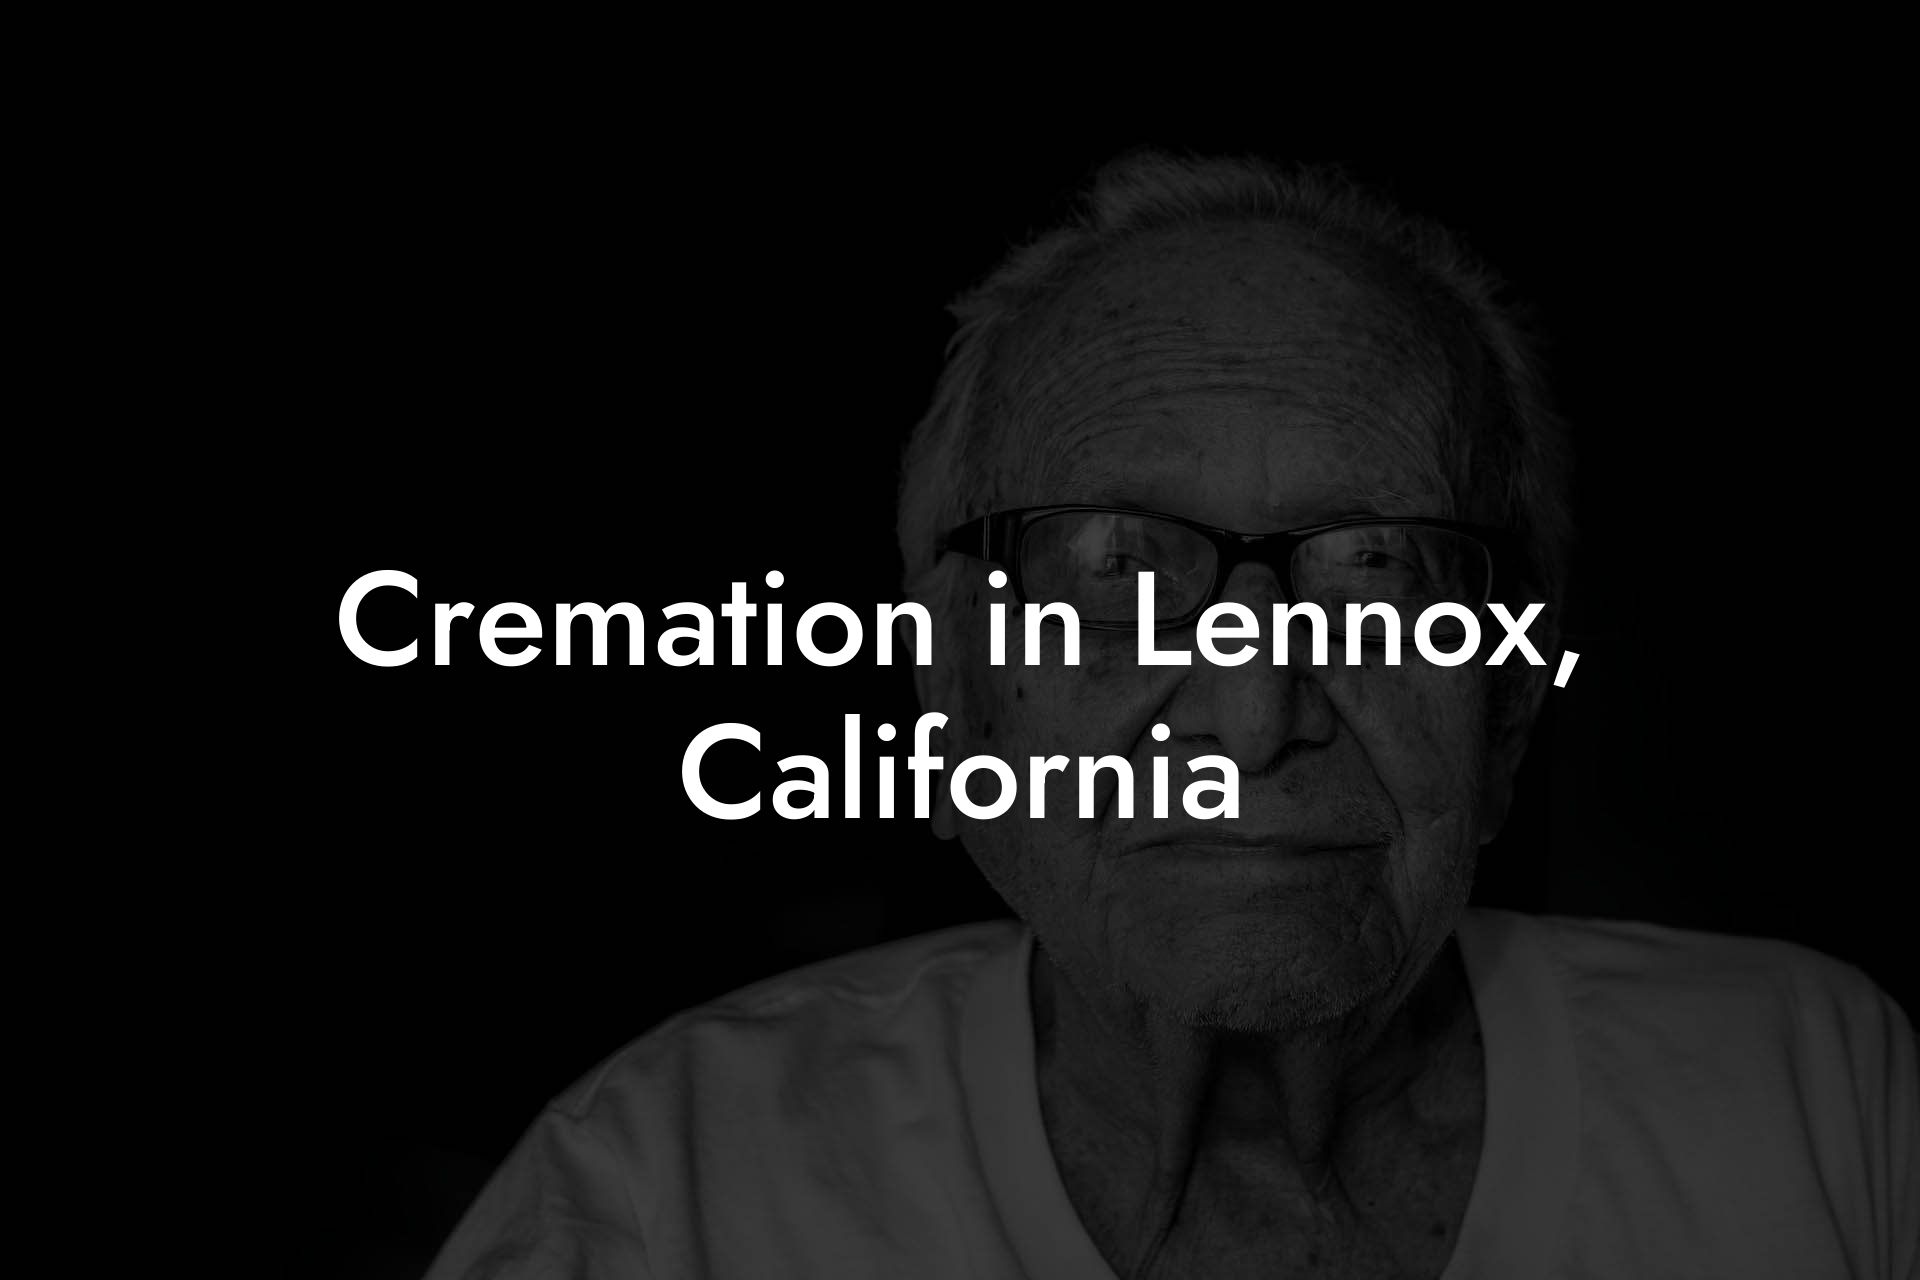 Cremation in Lennox, California